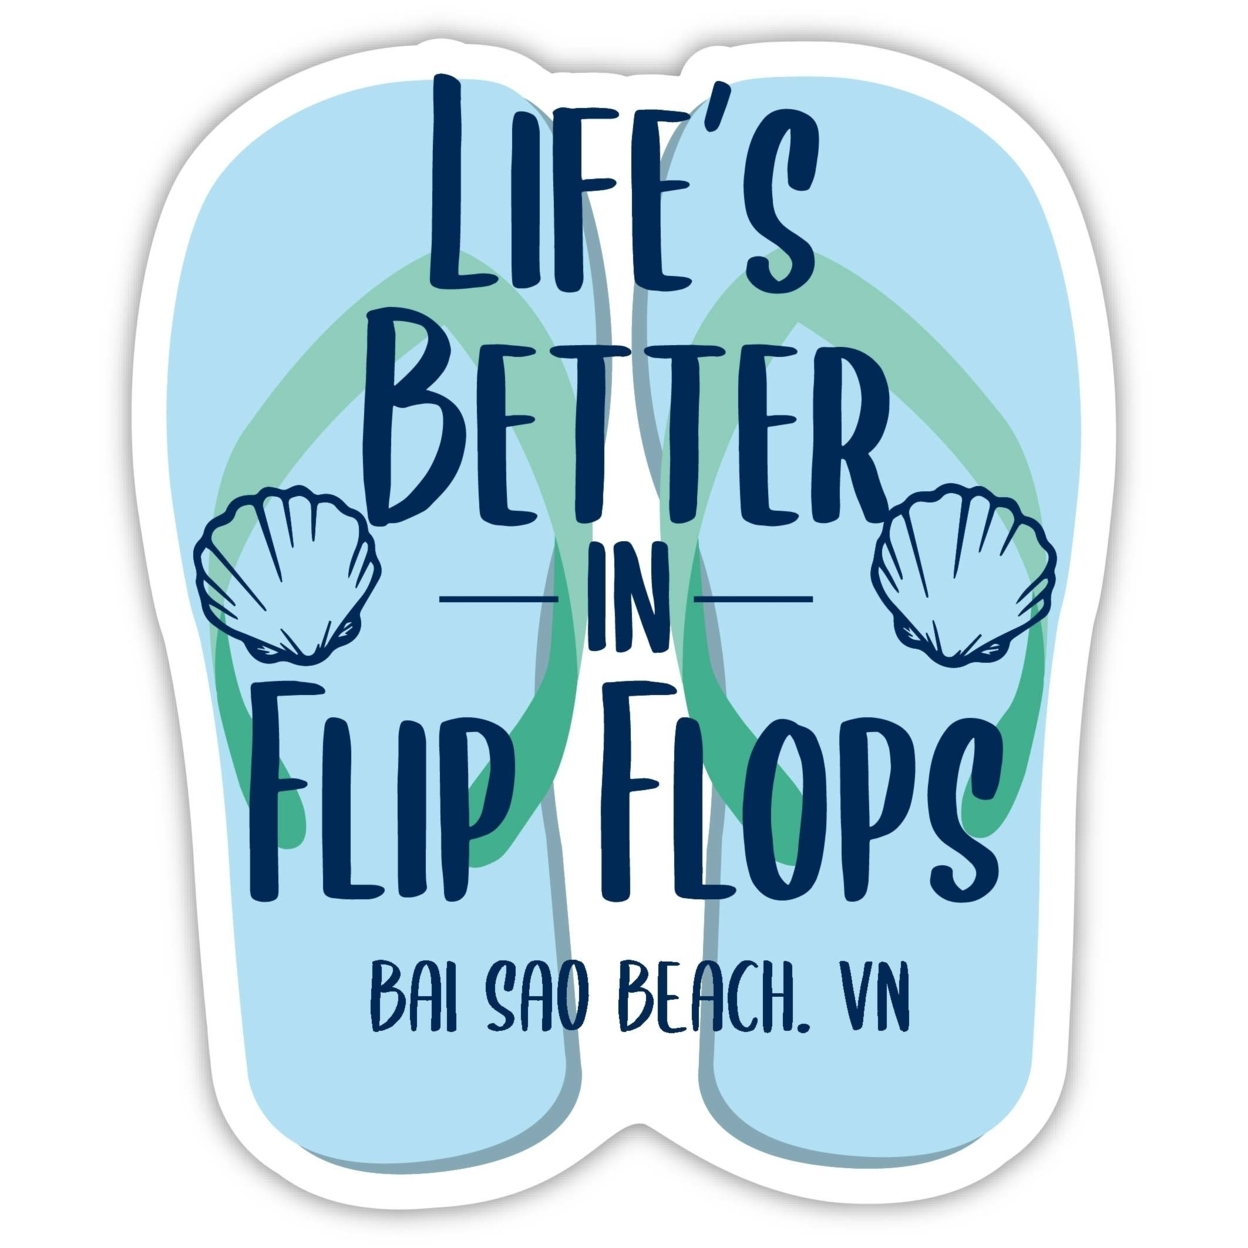 Bai Sao Beach Vietnam Souvenir 4 Inch Vinyl Decal Sticker Flip Flop Design